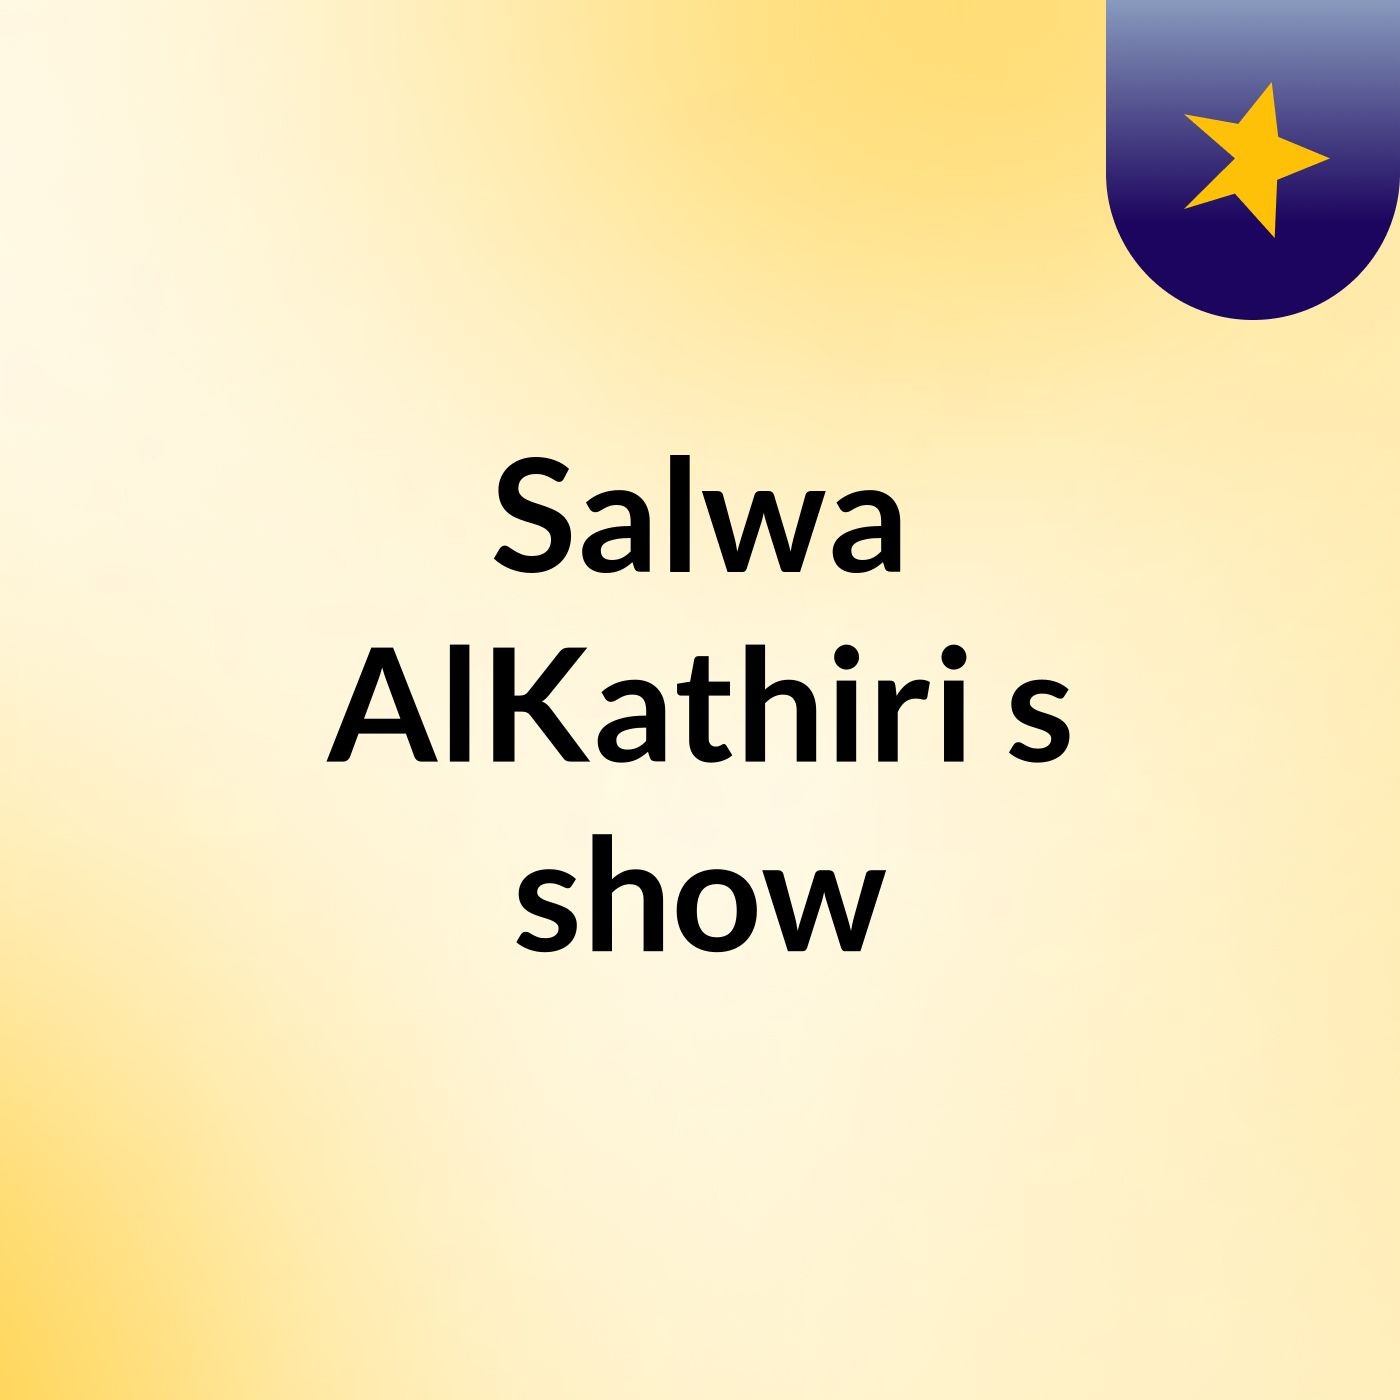 Salwa AlKathiri's show